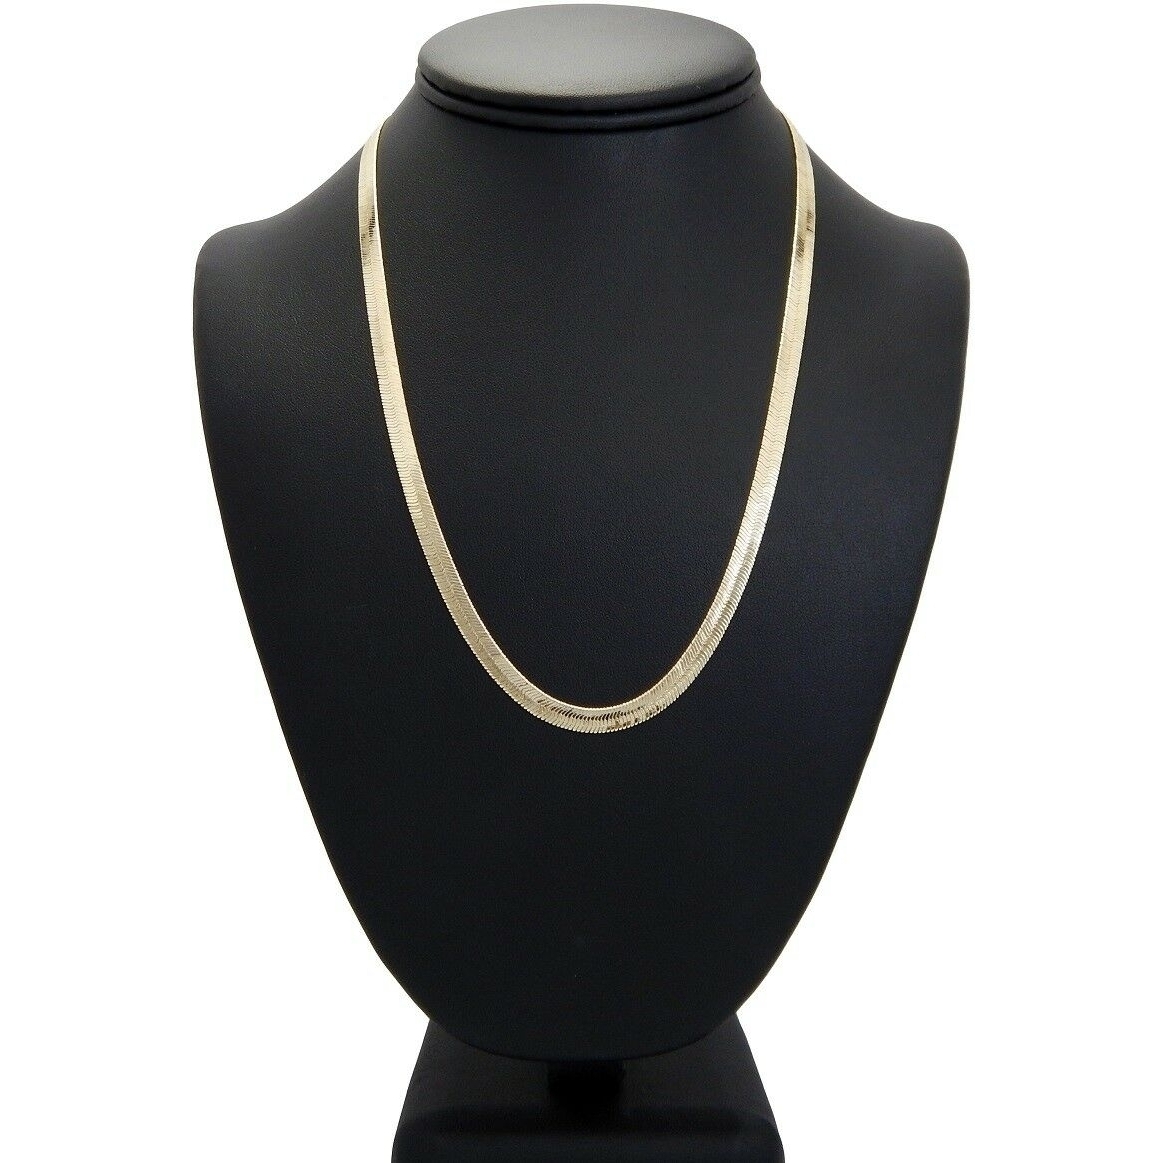 Herringbone Chain Necklace 5mm Width 18 20 24 30 Inch 14K Gold Filled High Polish Finsh High Finish Polished - 24''